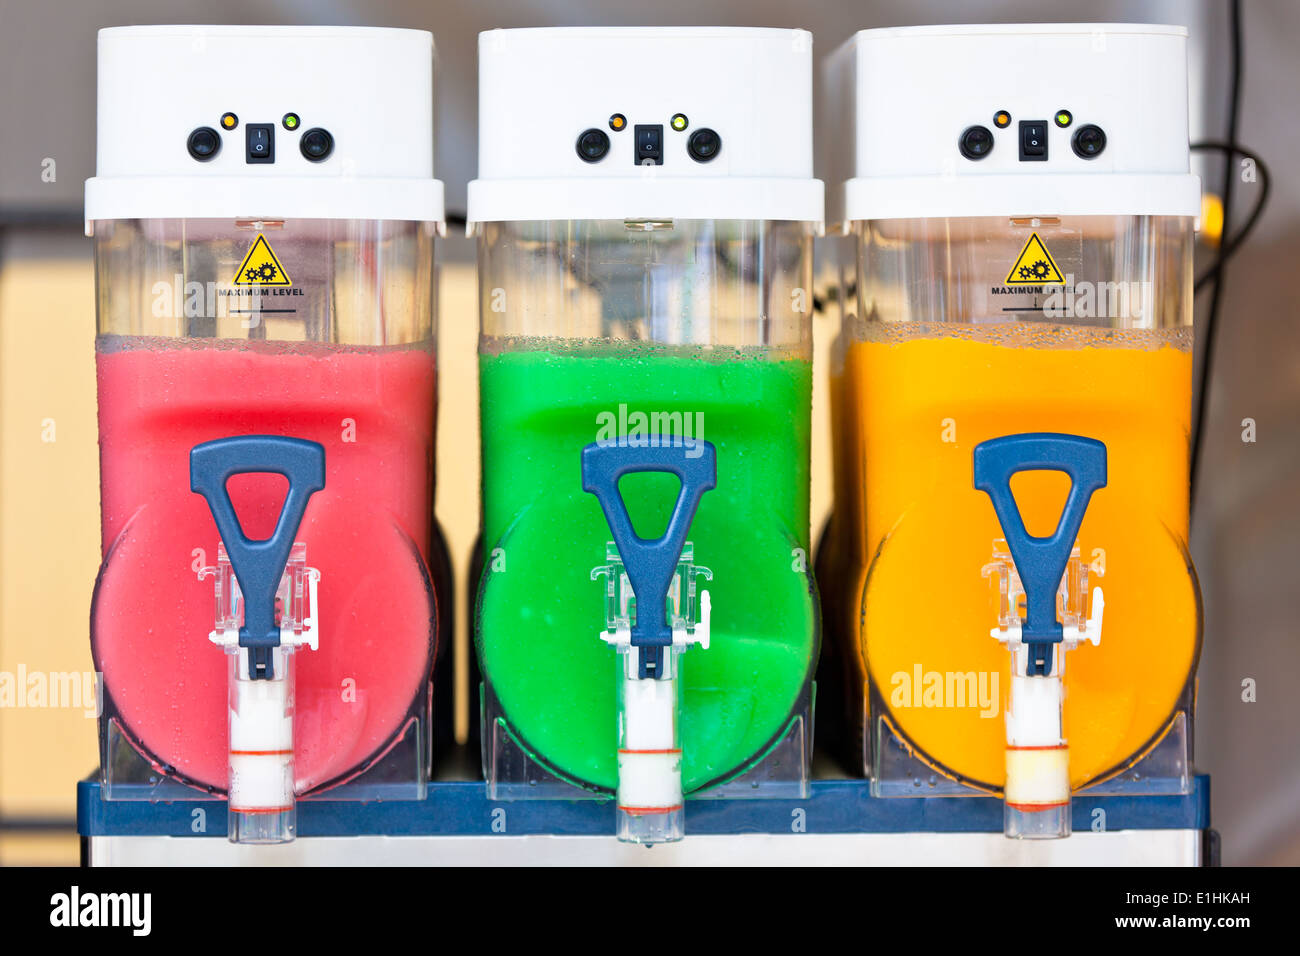 https://c8.alamy.com/comp/E1HKAH/crushed-fruit-ice-drink-dispensers-with-color-refreshments-E1HKAH.jpg